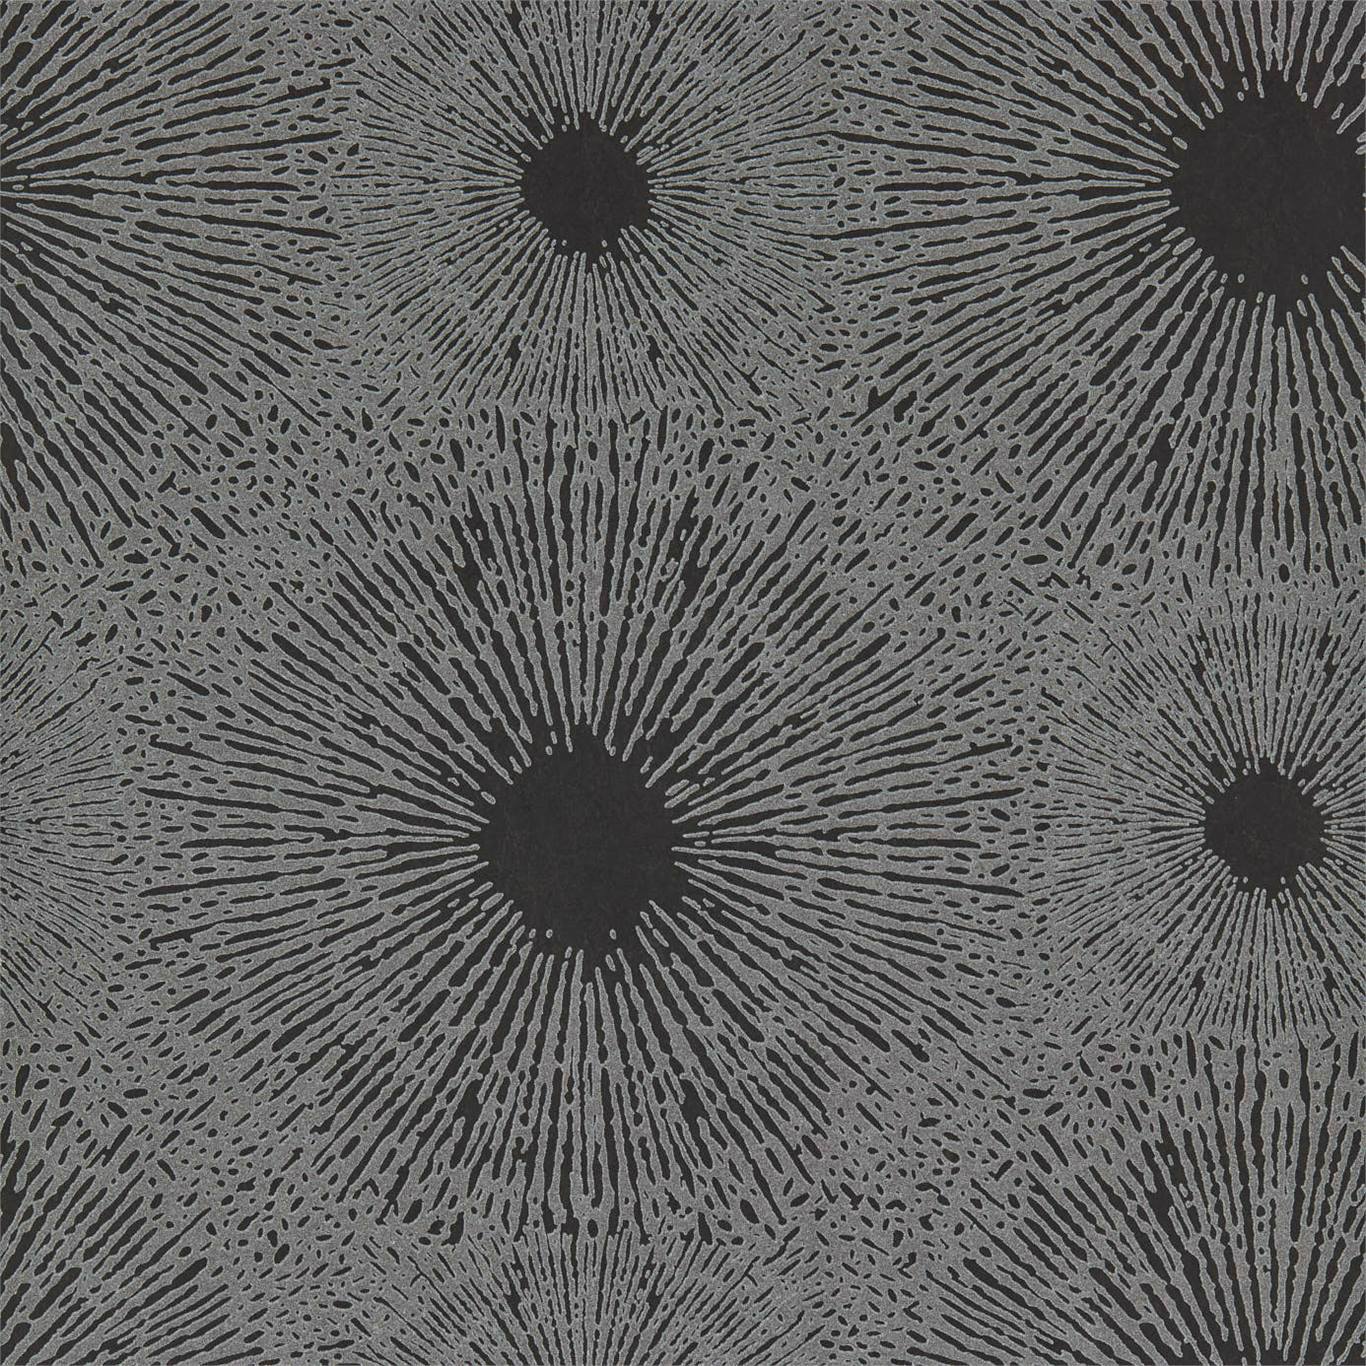 Perlite Wallpaper by Harlequin